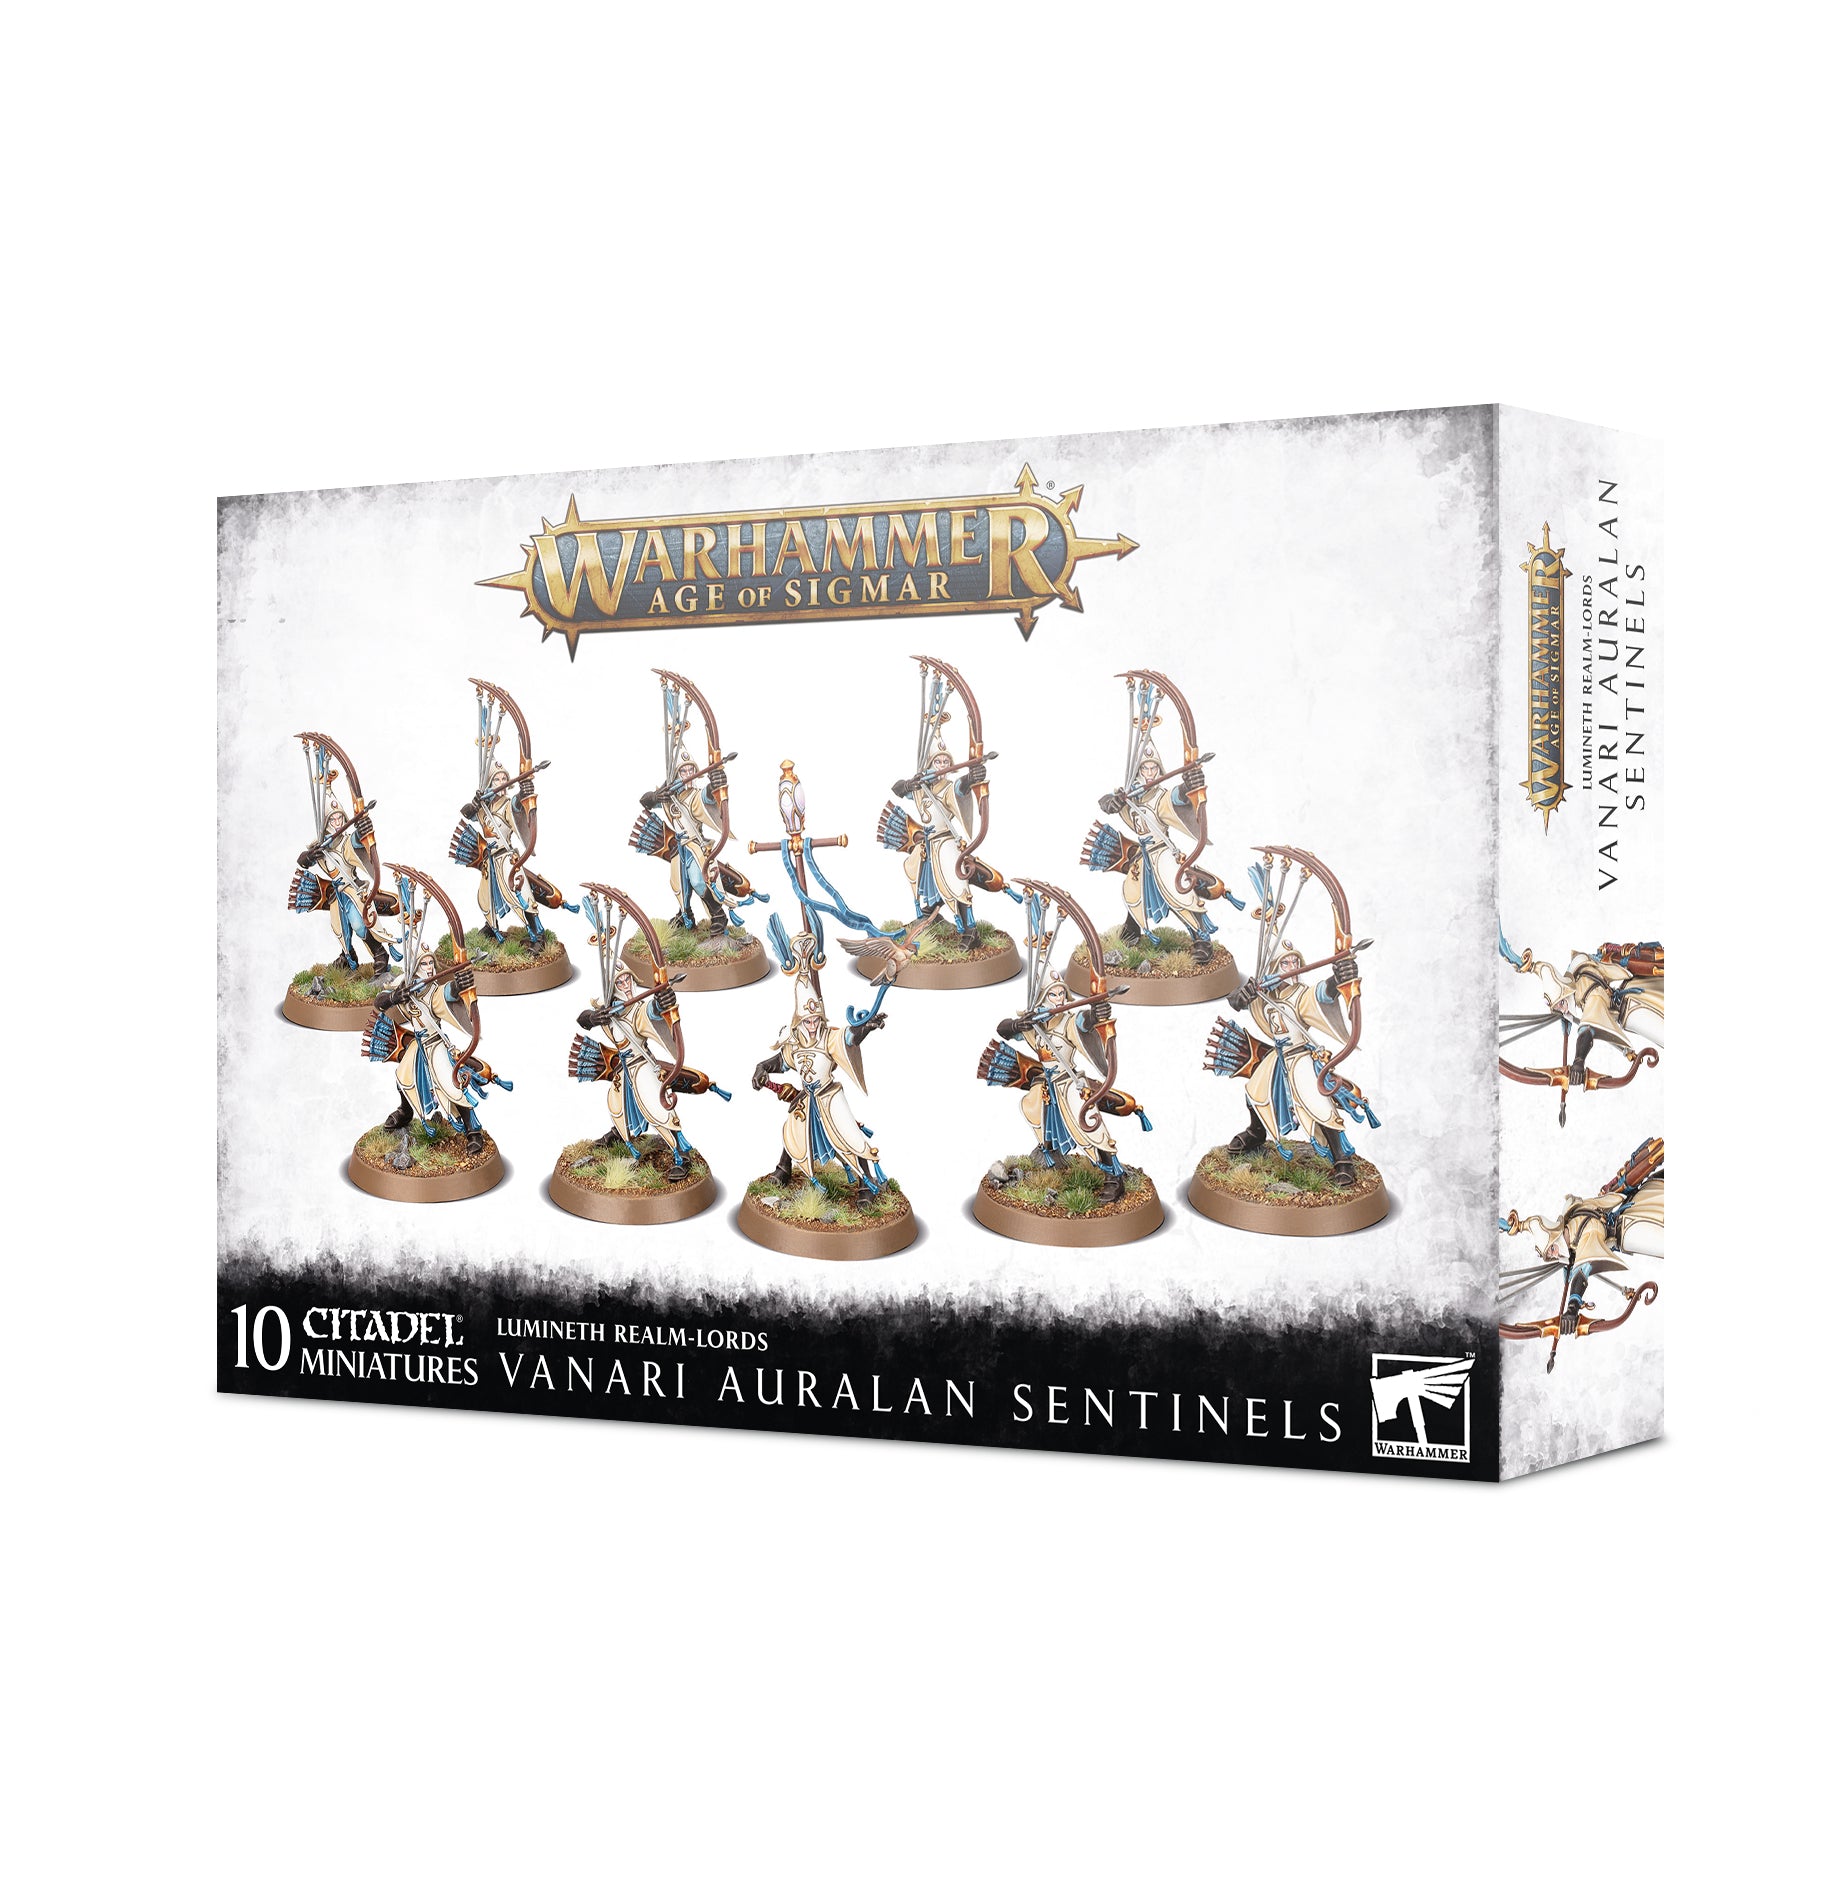 Warhammer Age of Sigmar: Lumineth Realm-Lords: Vanari Auralan Sentinels